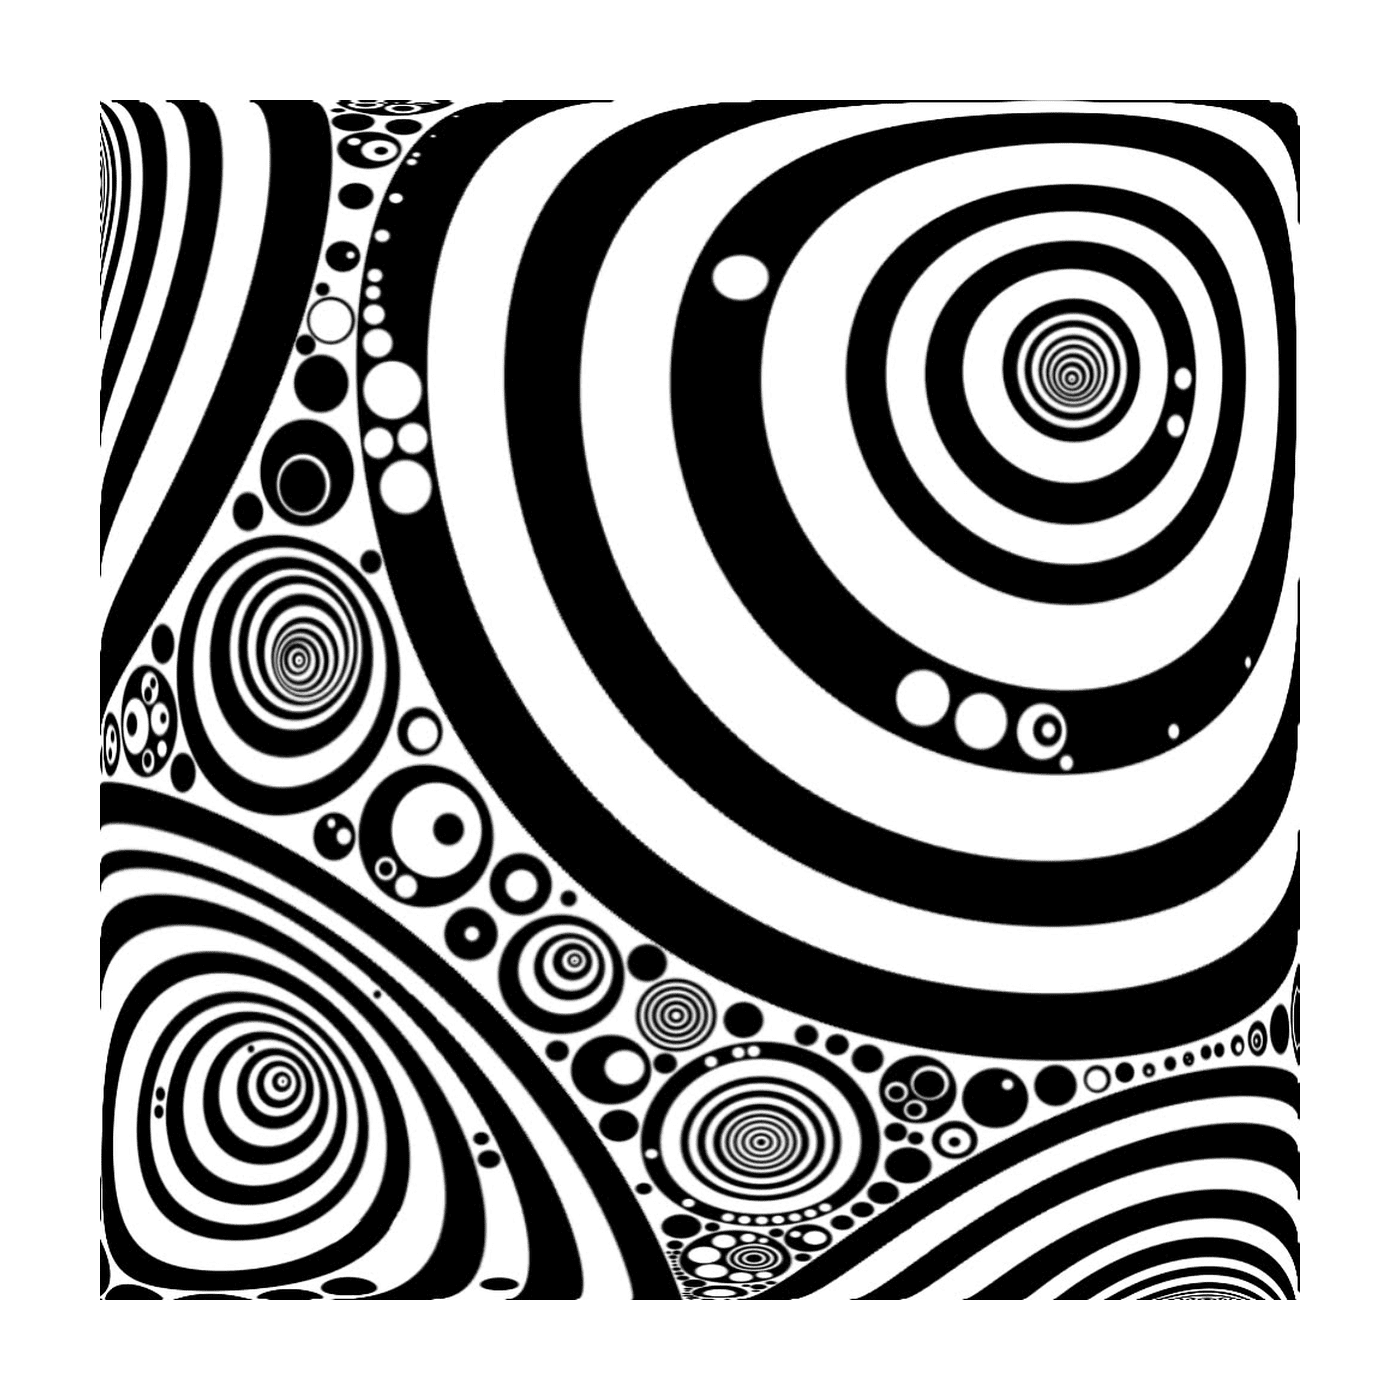  a spiral pattern 